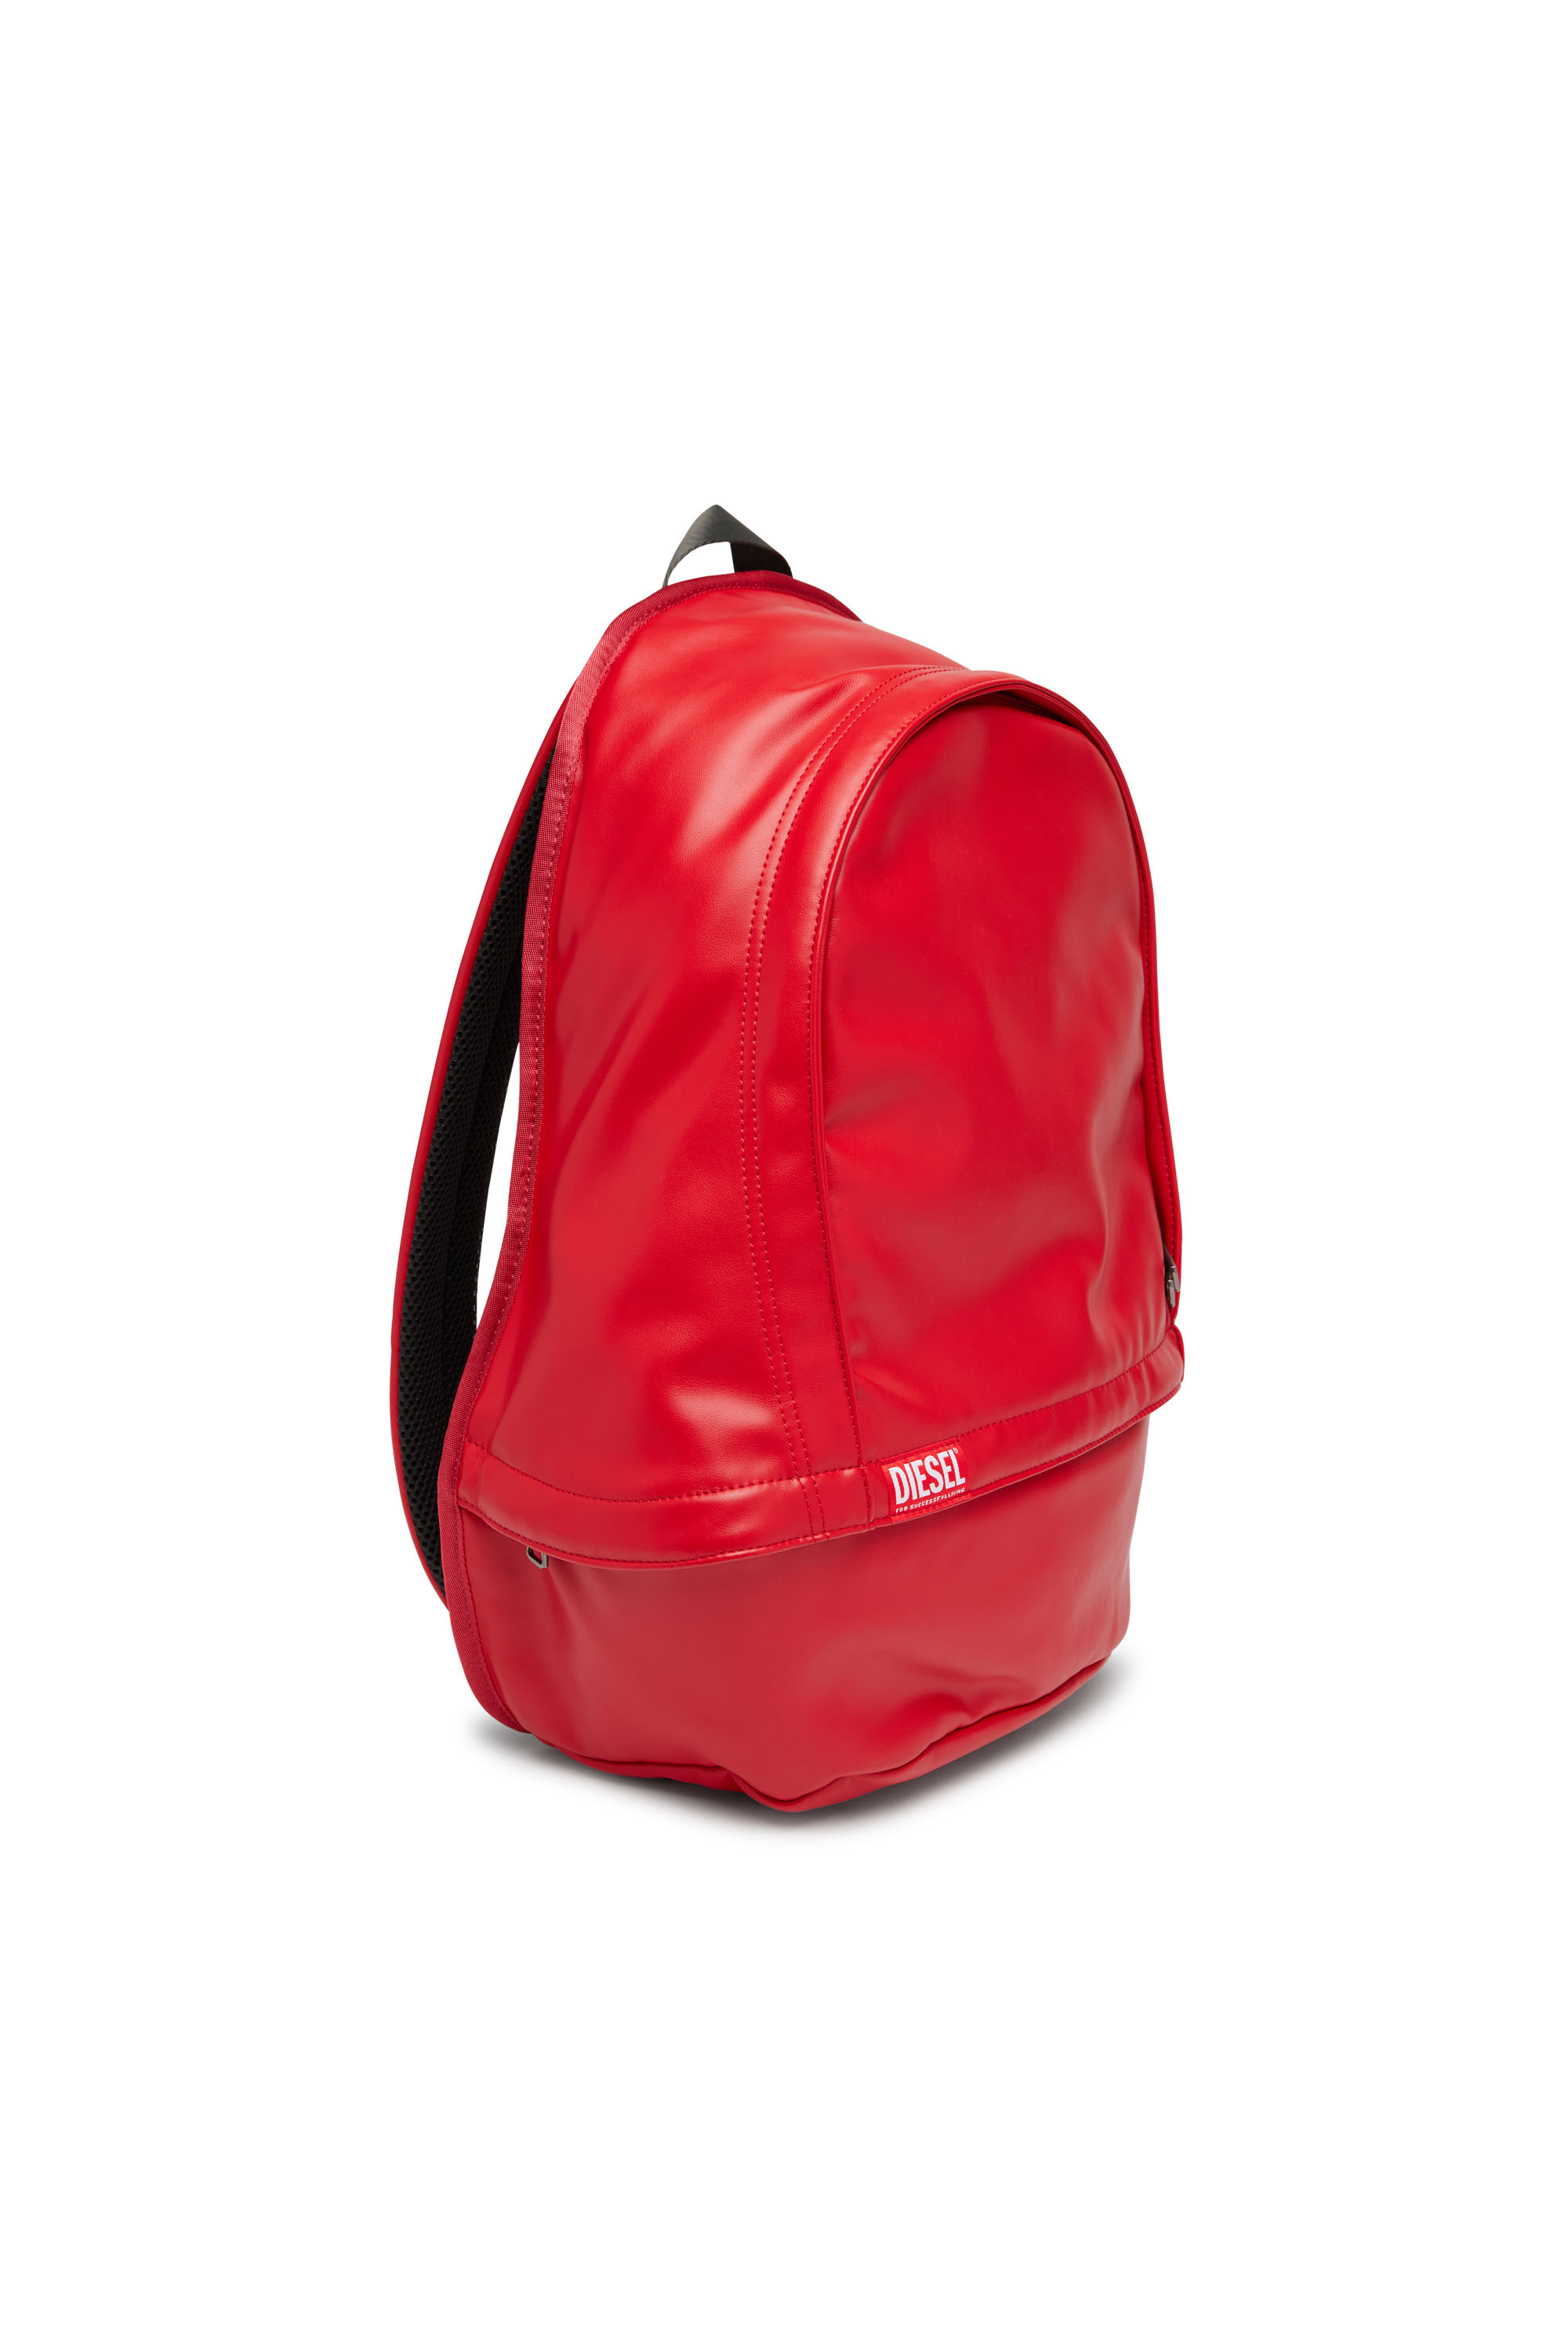 Diesel - RAVE BACKPACK, Hombre Rave Backpack - Mochila de materiales reciclados in Rojo - Image 5